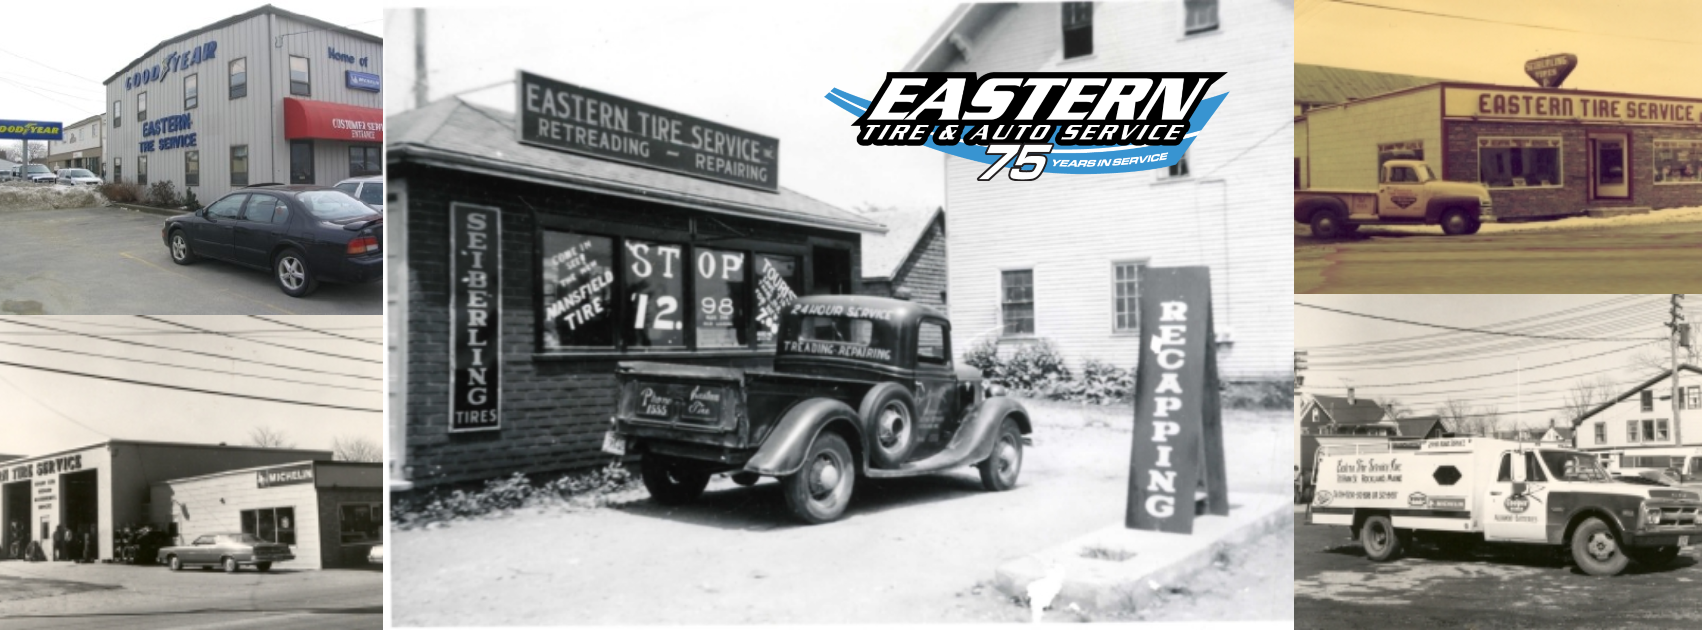 Eastern Tire & Auto Service Inc. - Collage